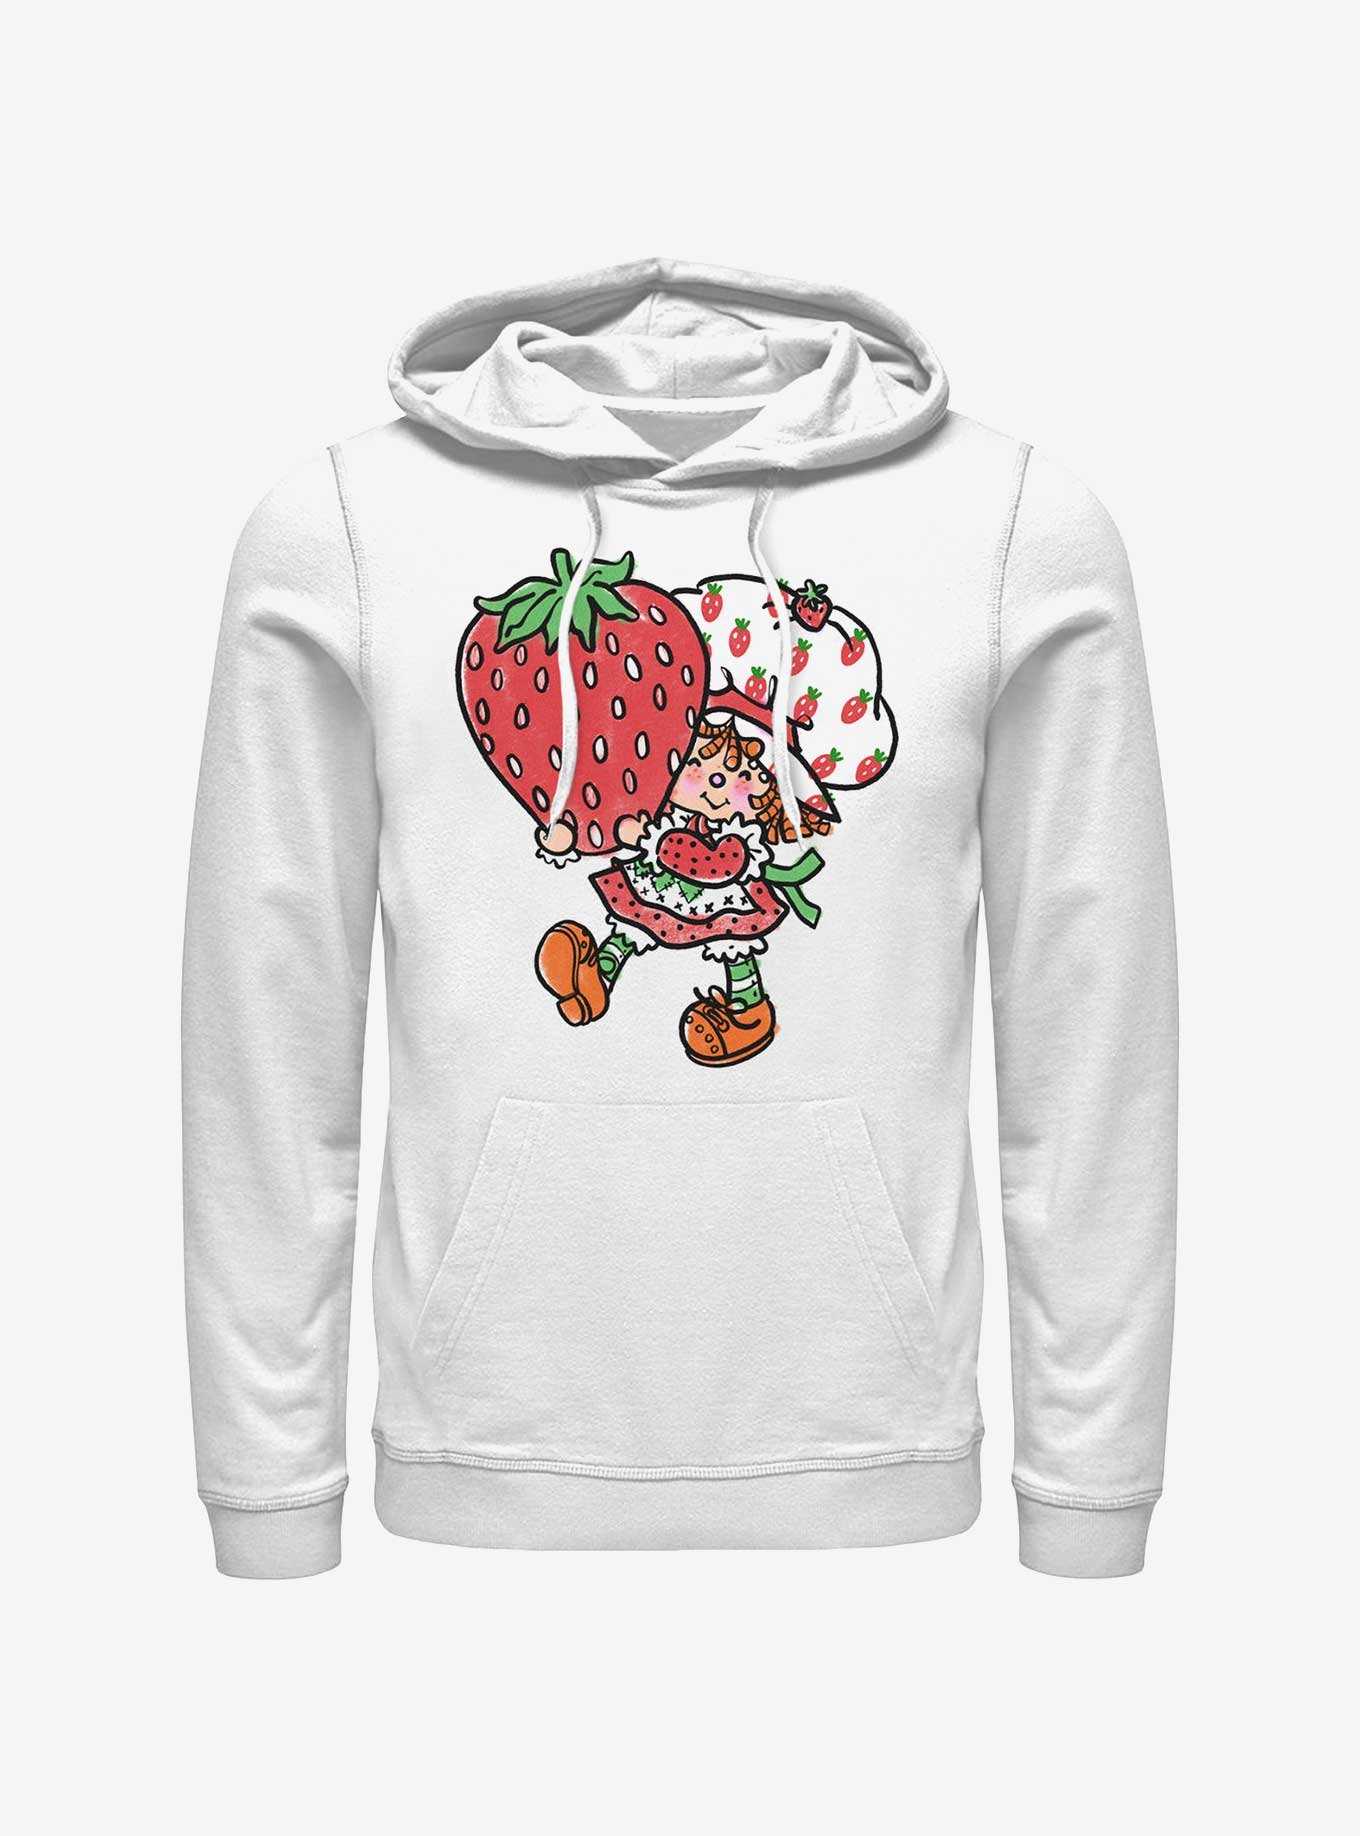 Strawberry Shortcake Always Blooming Womens Slouchy Sweatshirt